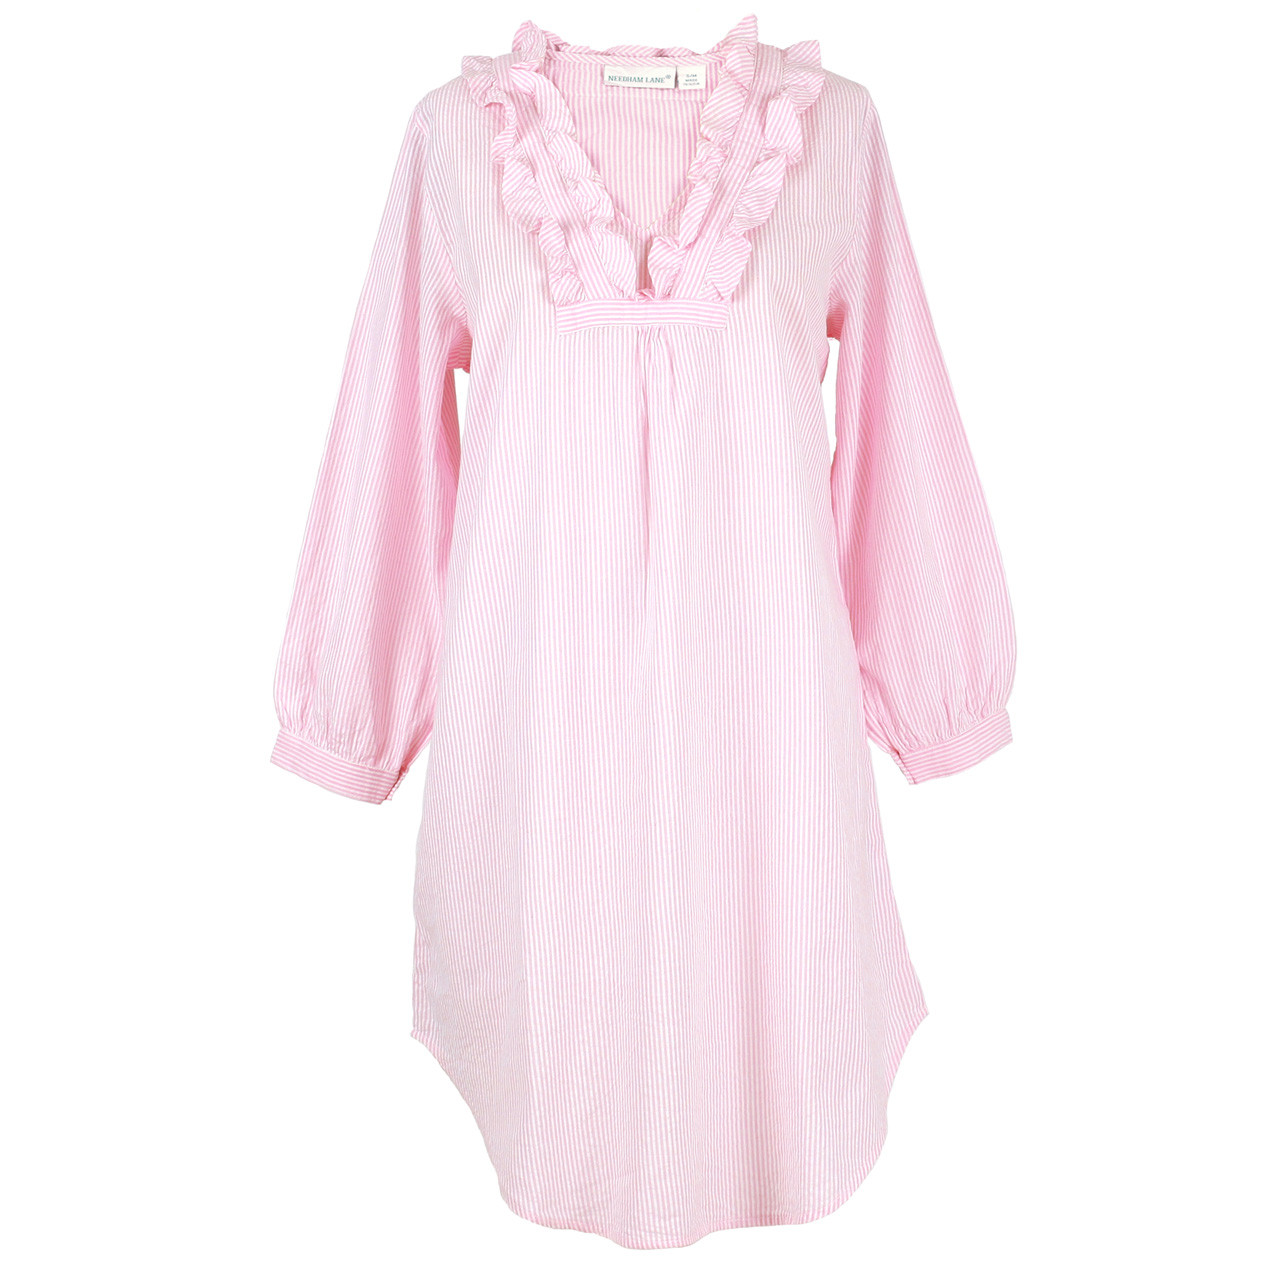 Women's Cotton Sleep Shirt, Long Sleeve Button-down Nightshirt Flannel Night  Shirt,l, (yellow+pink)